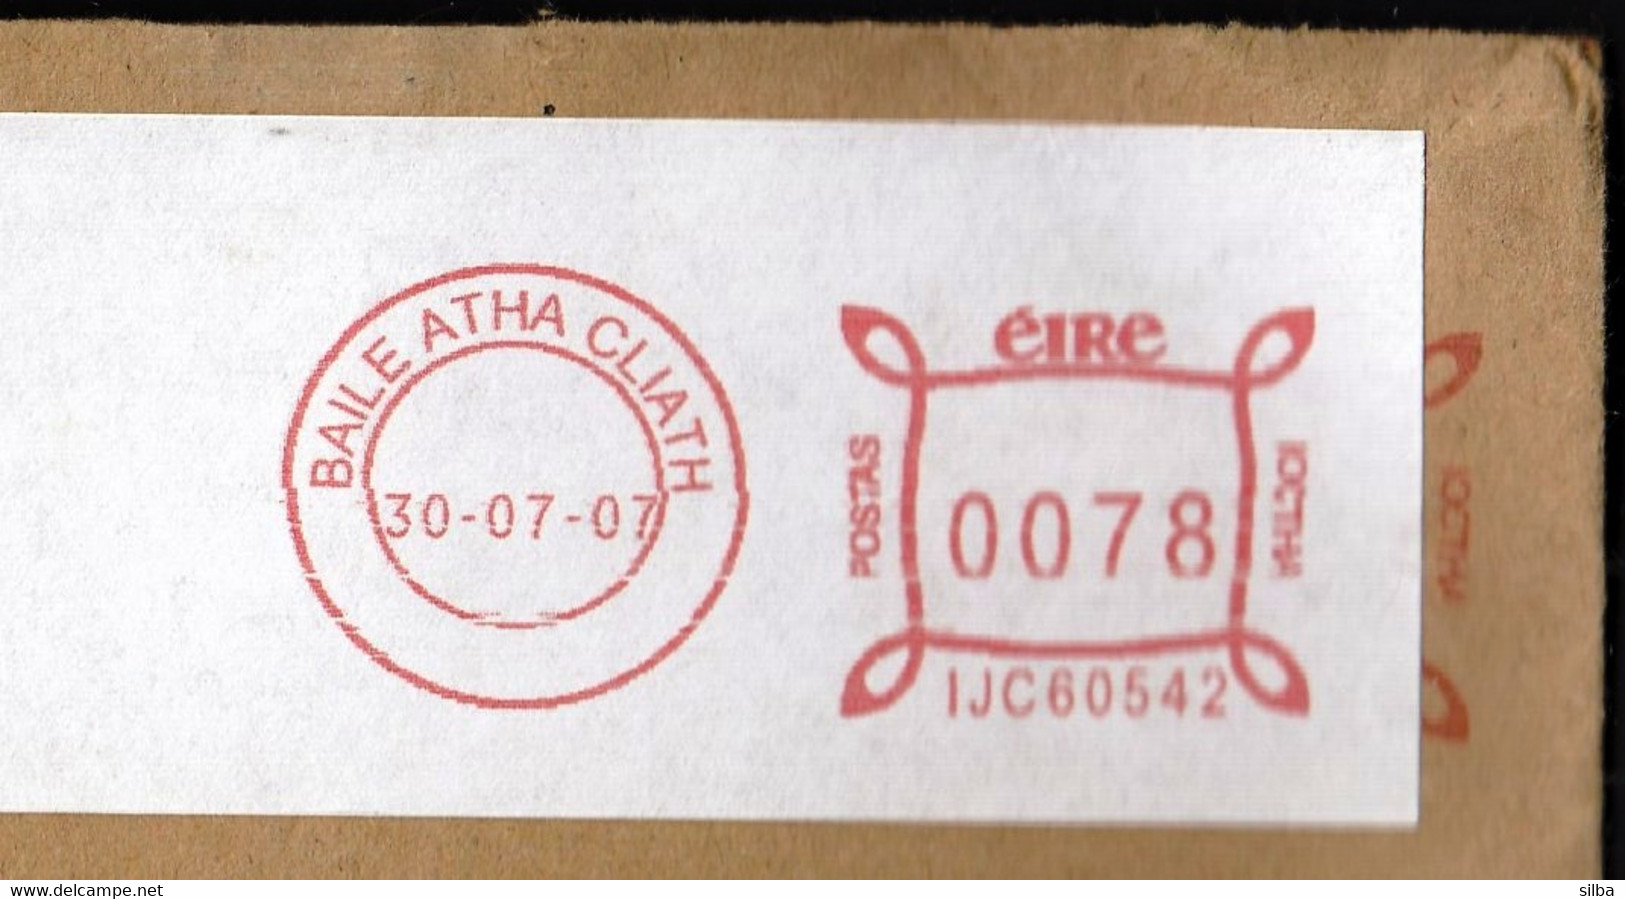 Ireland Baile Atha Cliath 2007 / Machine Stamp ATM EMA Franking Label - Franking Labels